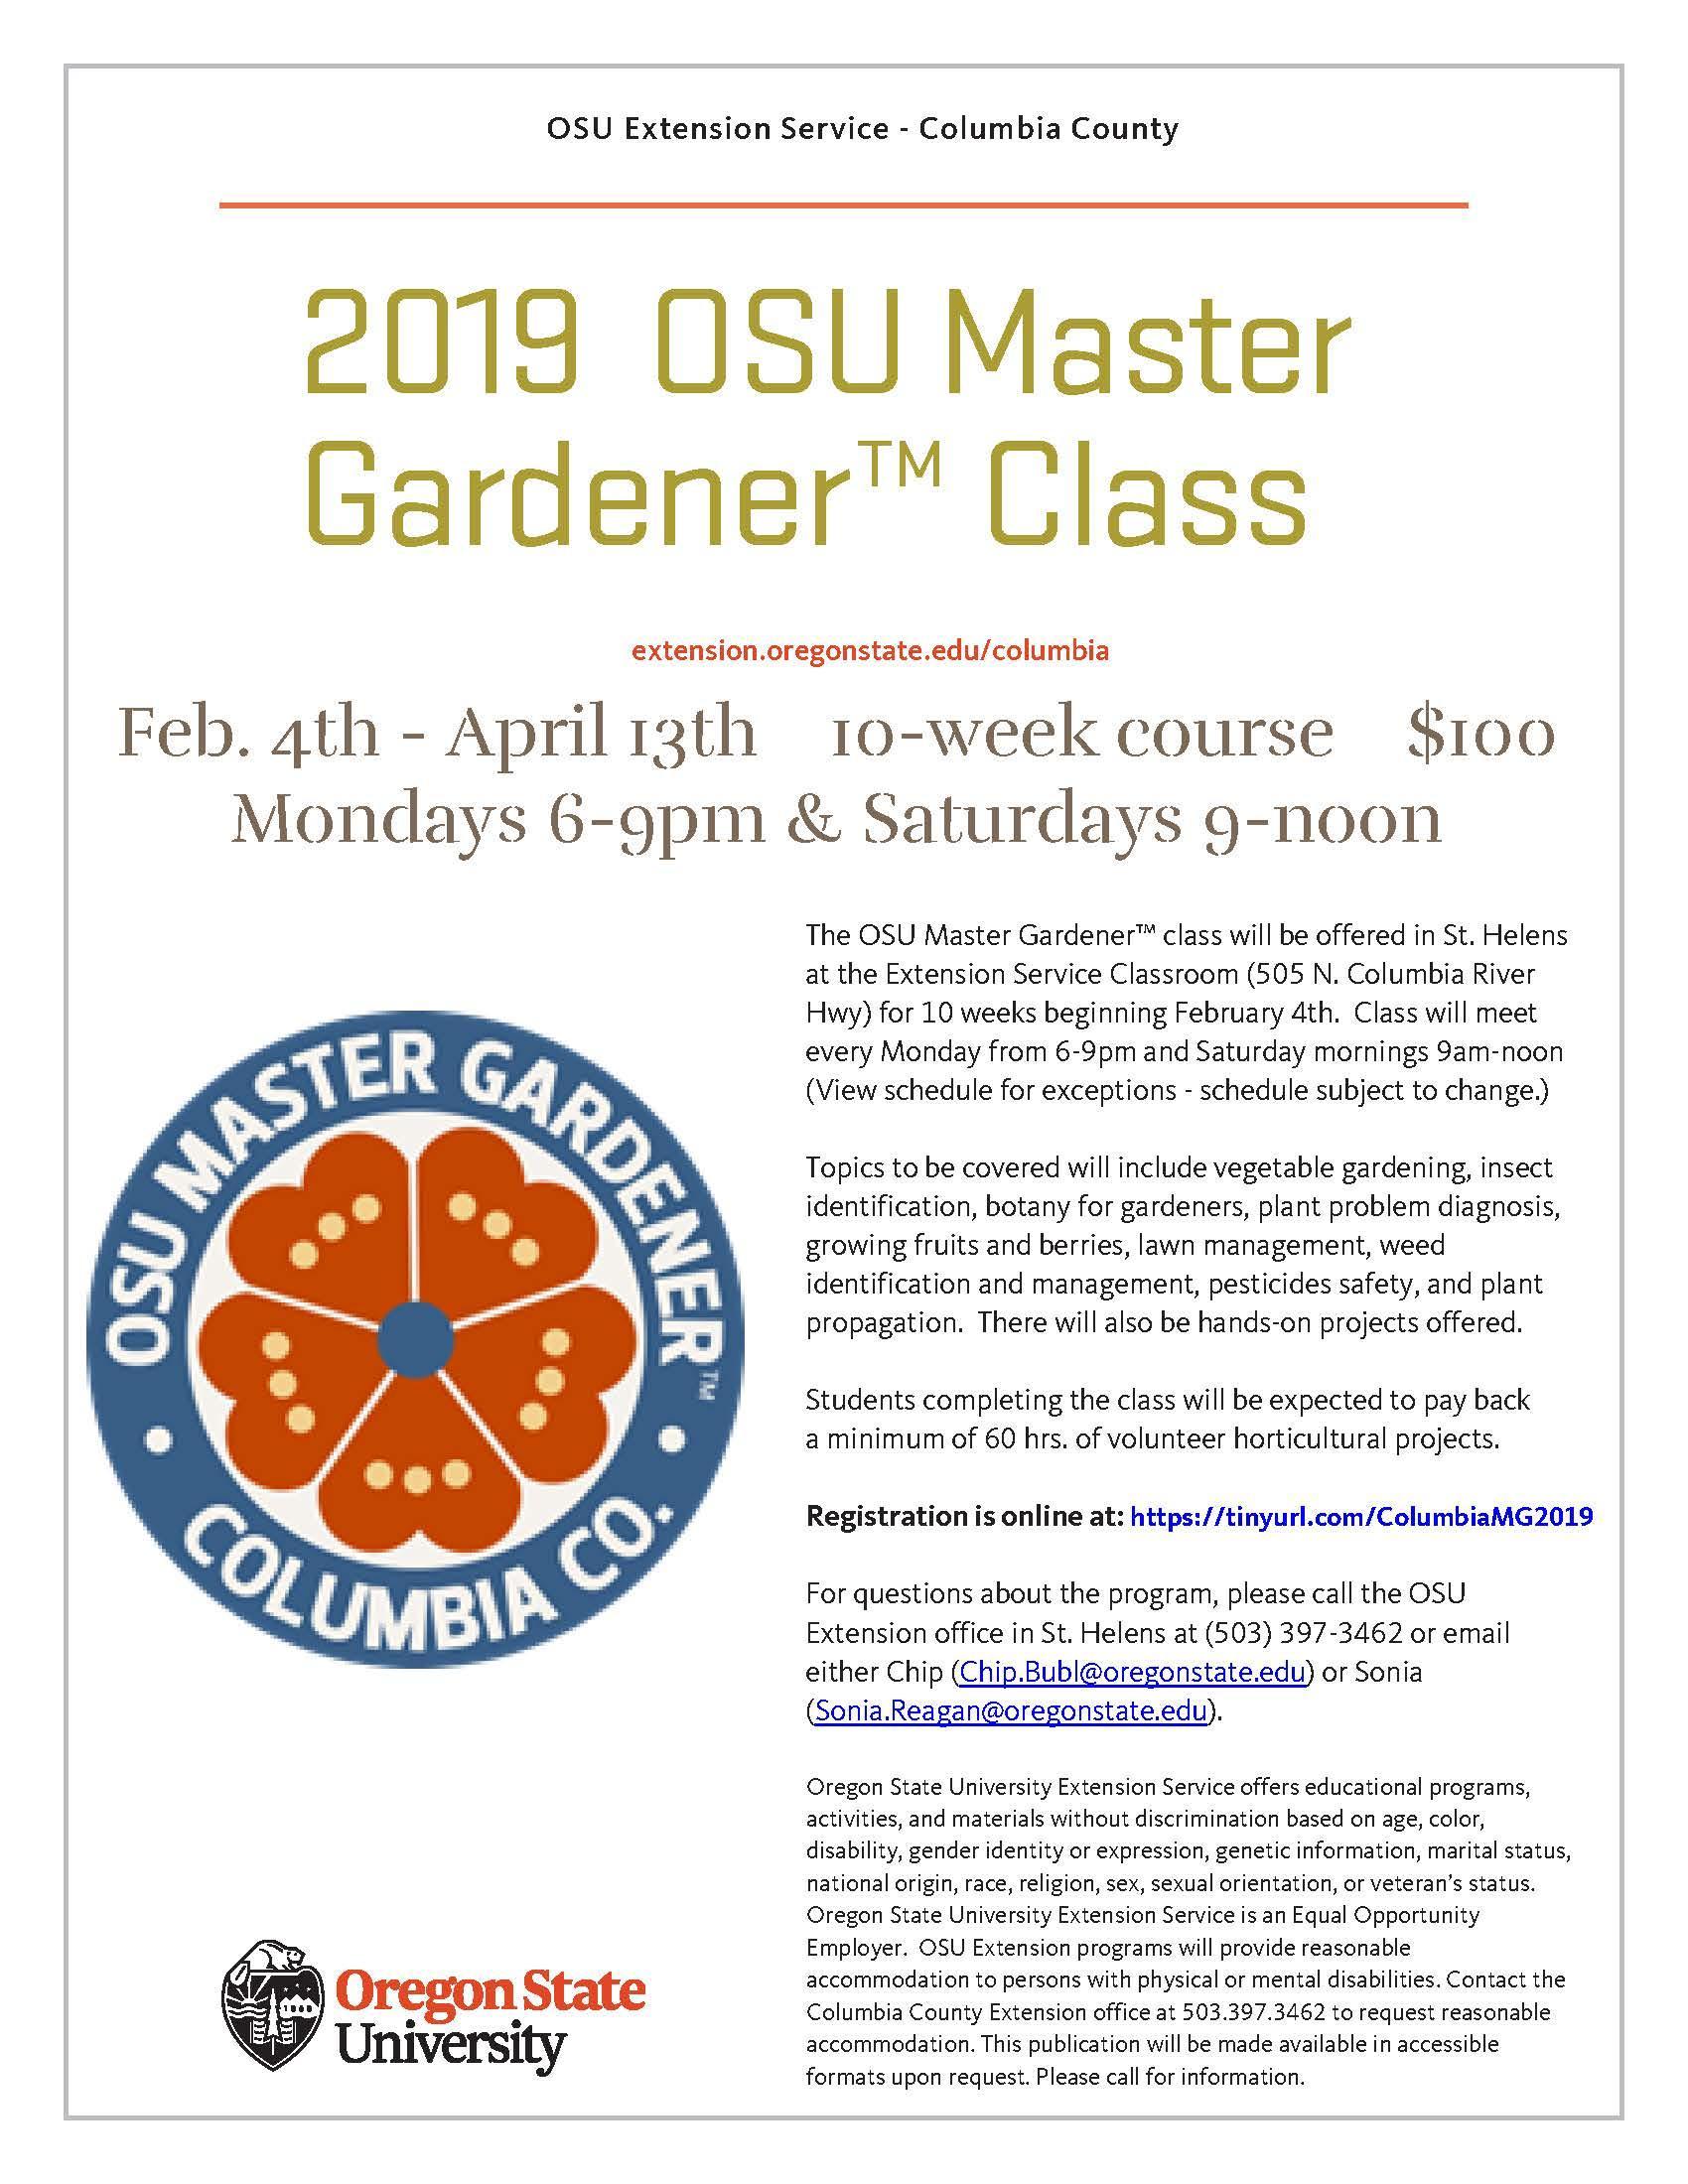 2019 Columbia County Master Gardener Training Enrollment Is Open